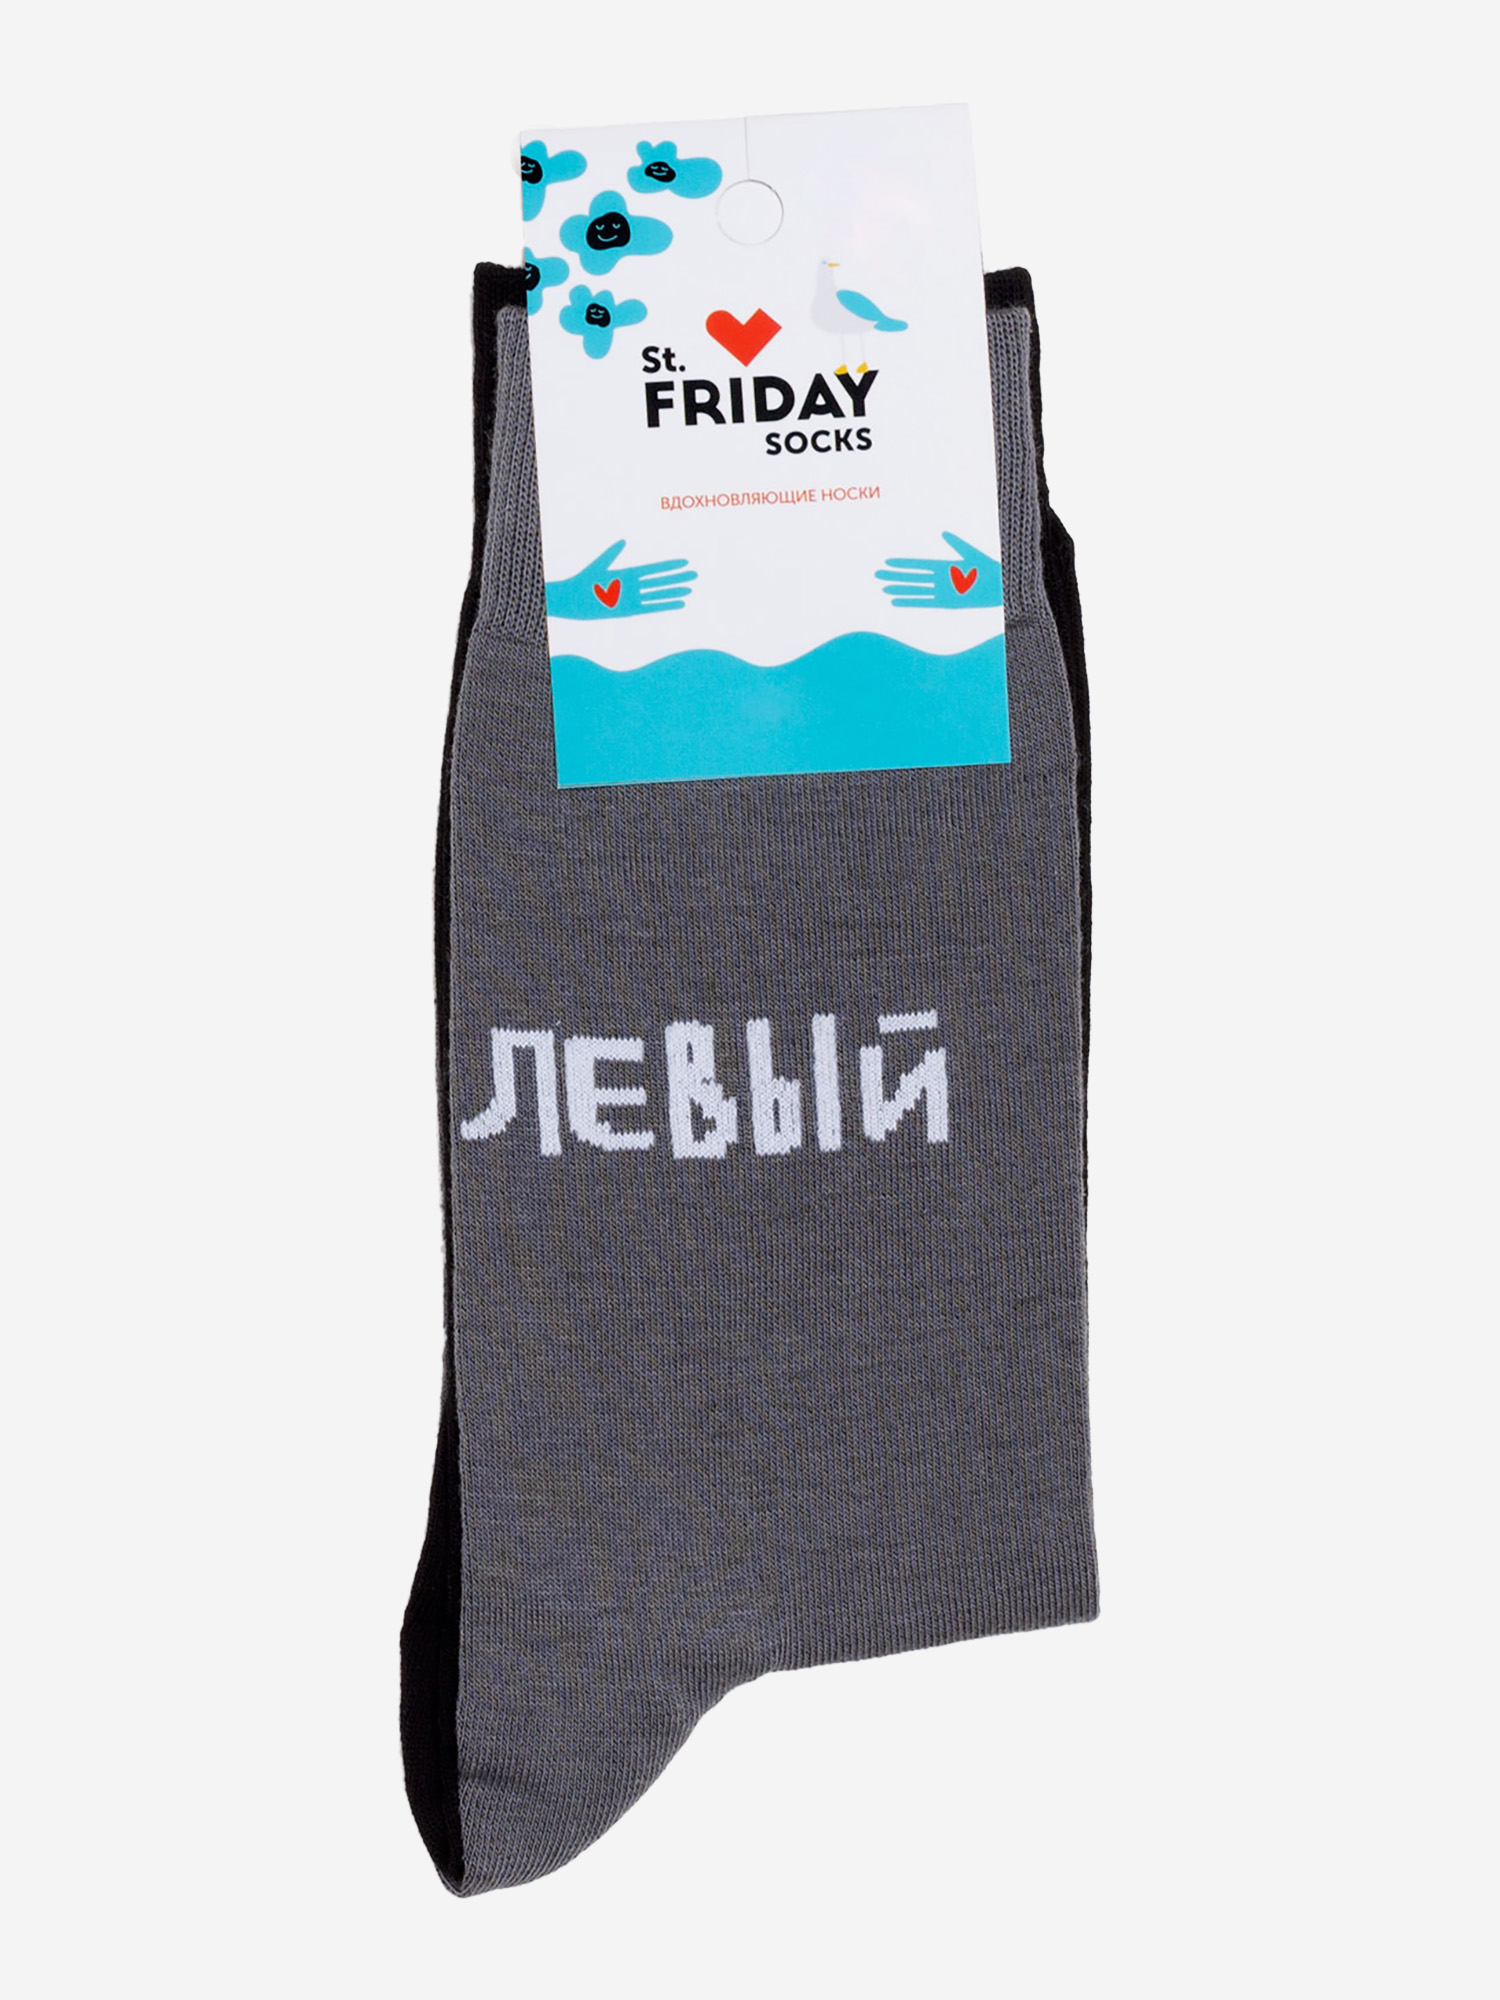 Носки с рисунками St.Friday Socks - Левый, Левый, Серый